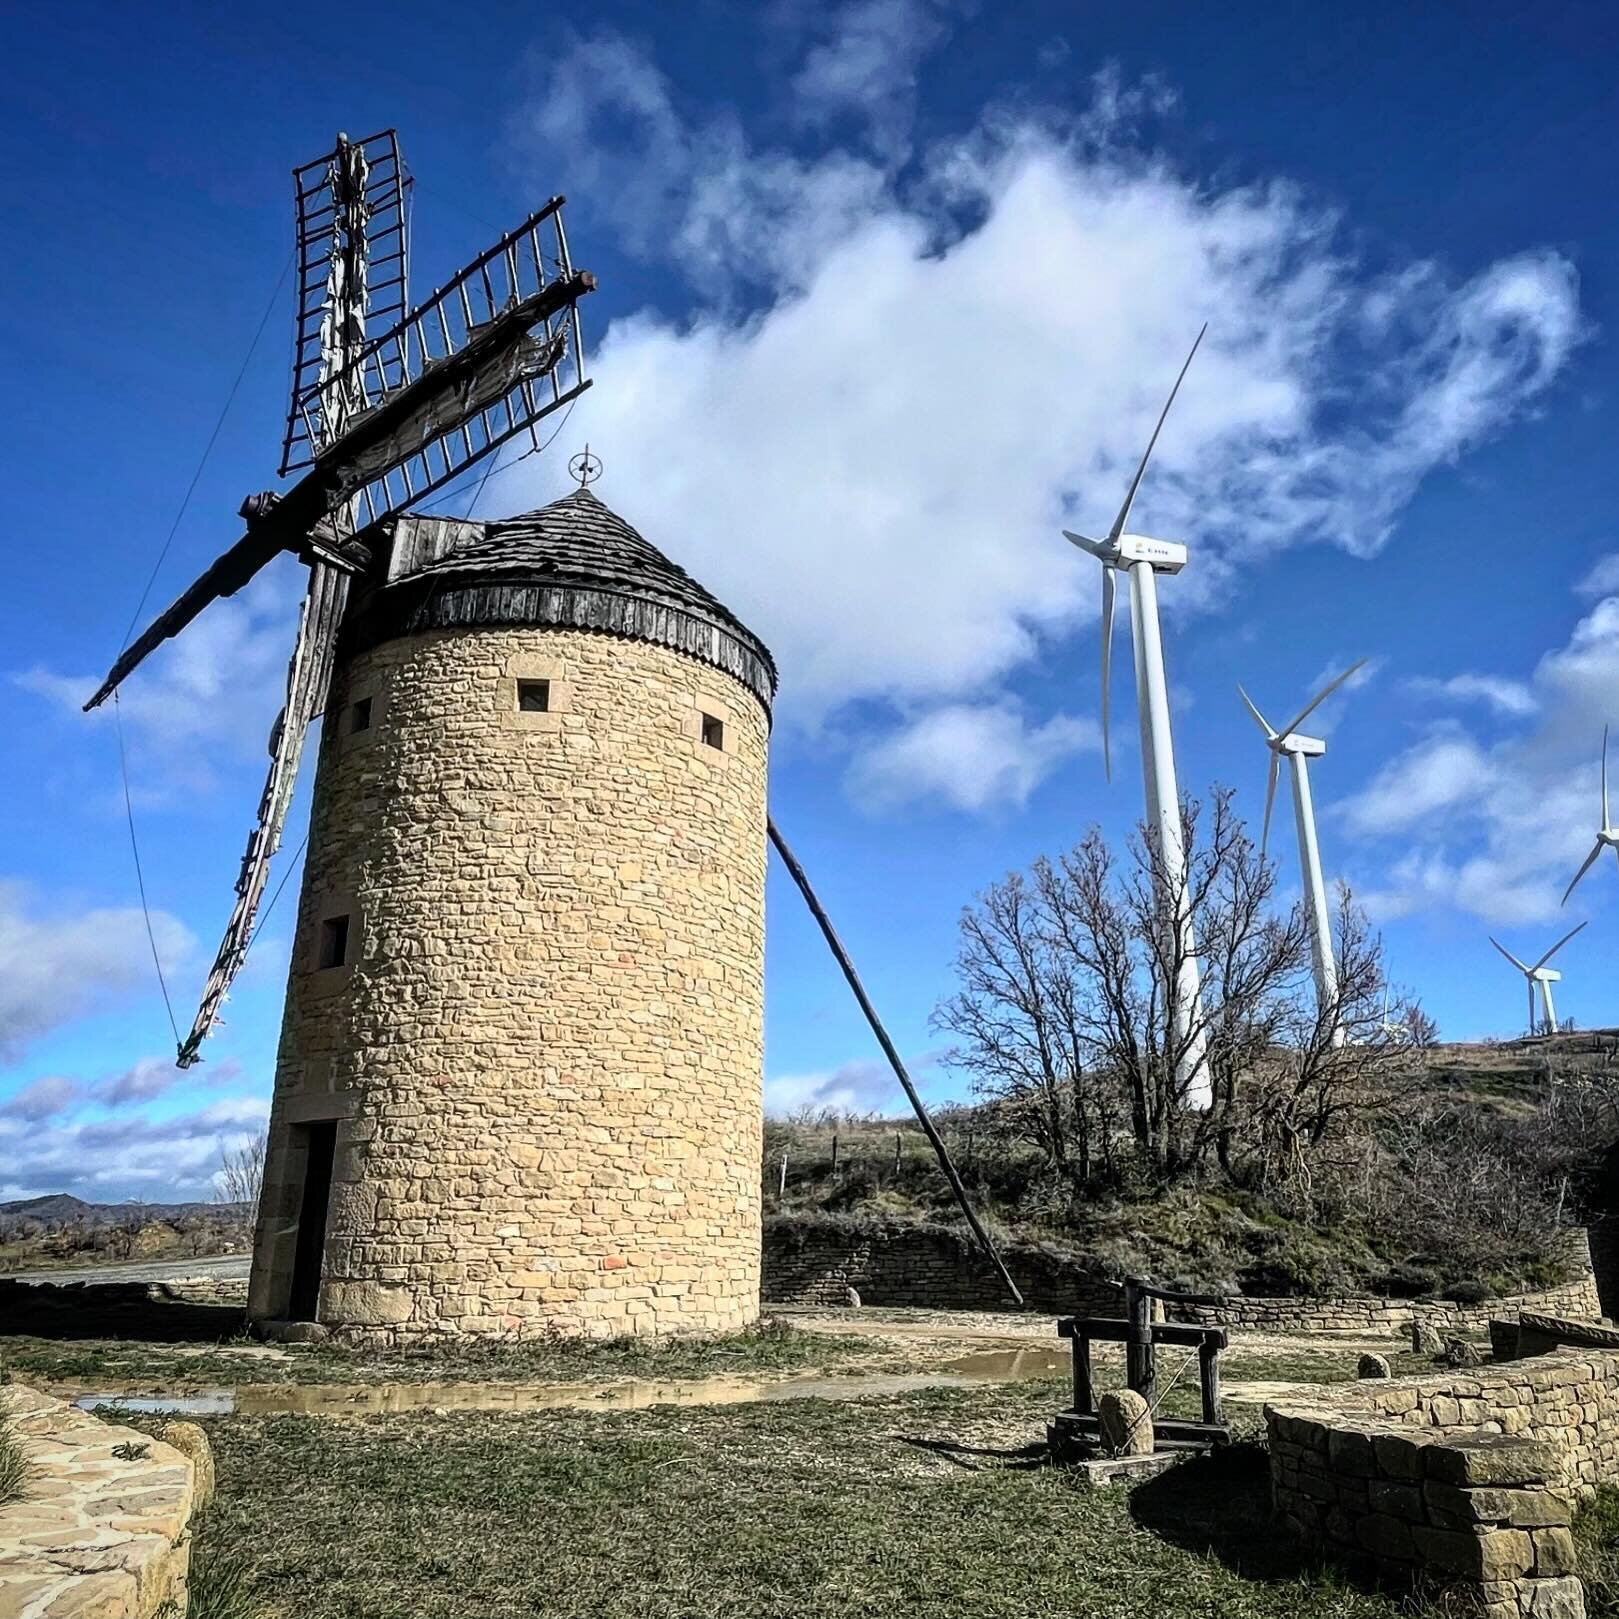 Windy Then, Windy Now. #windmill #windmills #history #architecture #technology #windpower #Spain